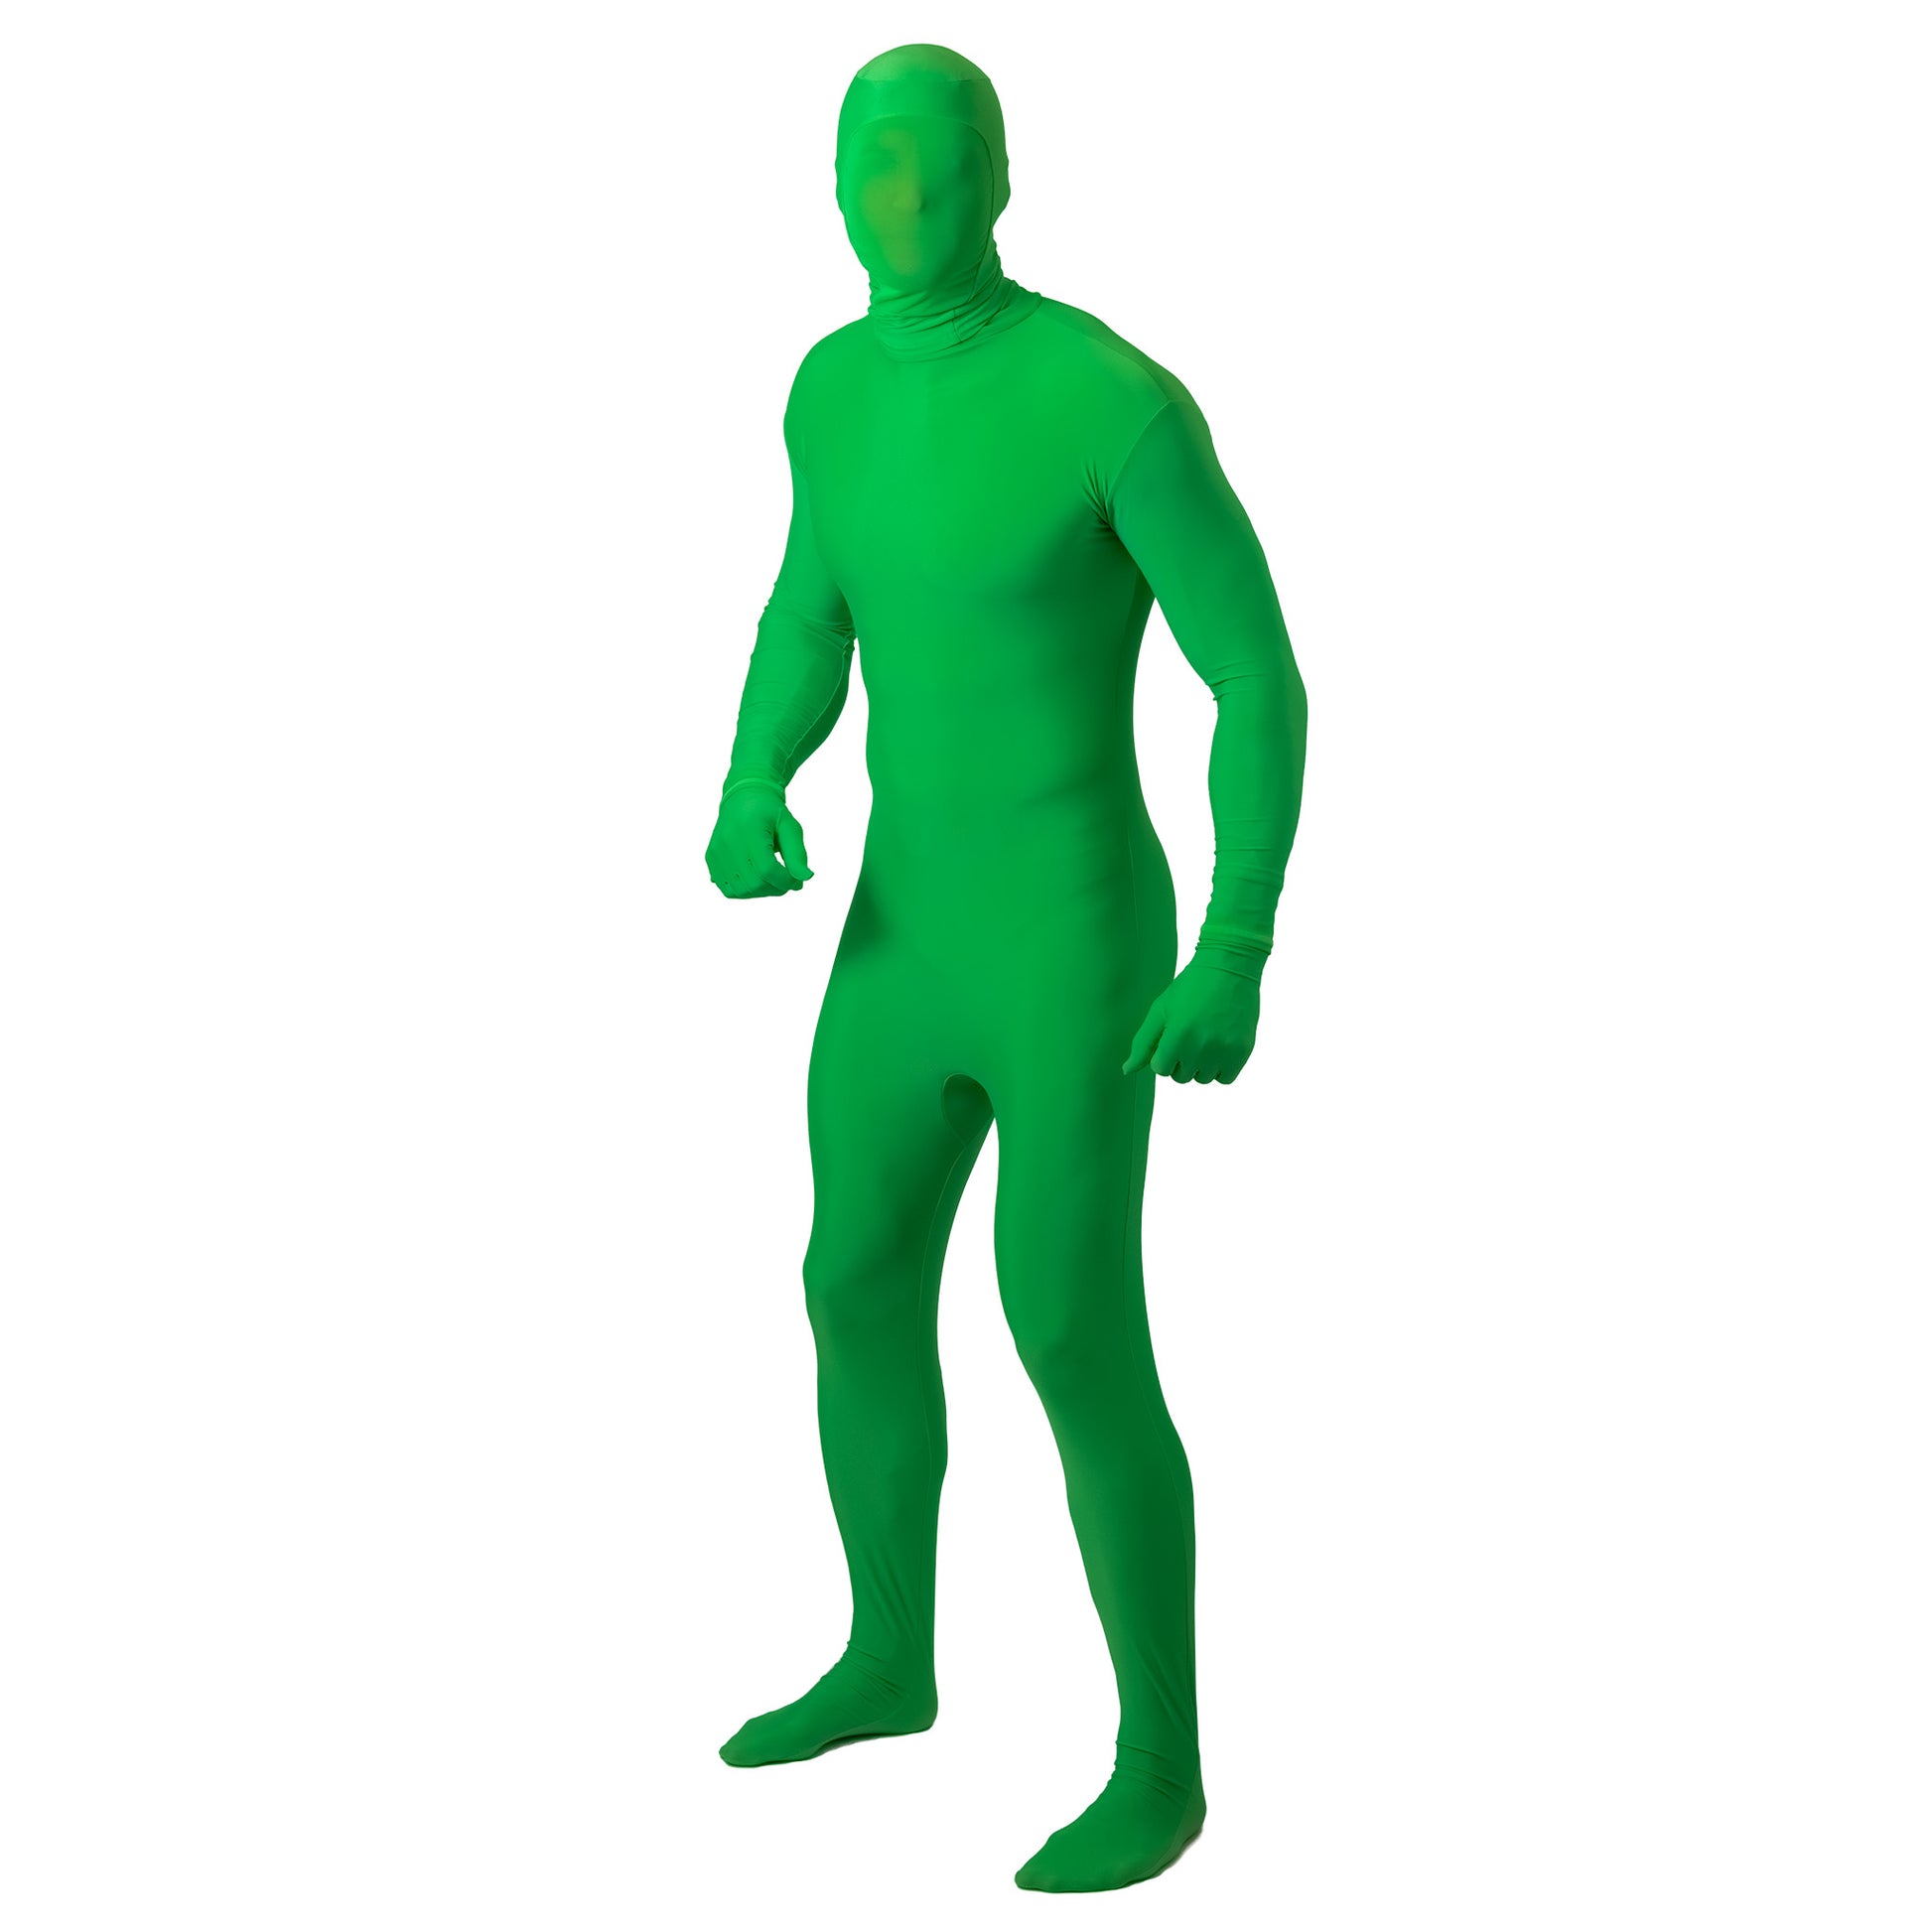 chroma key green screen suit pose